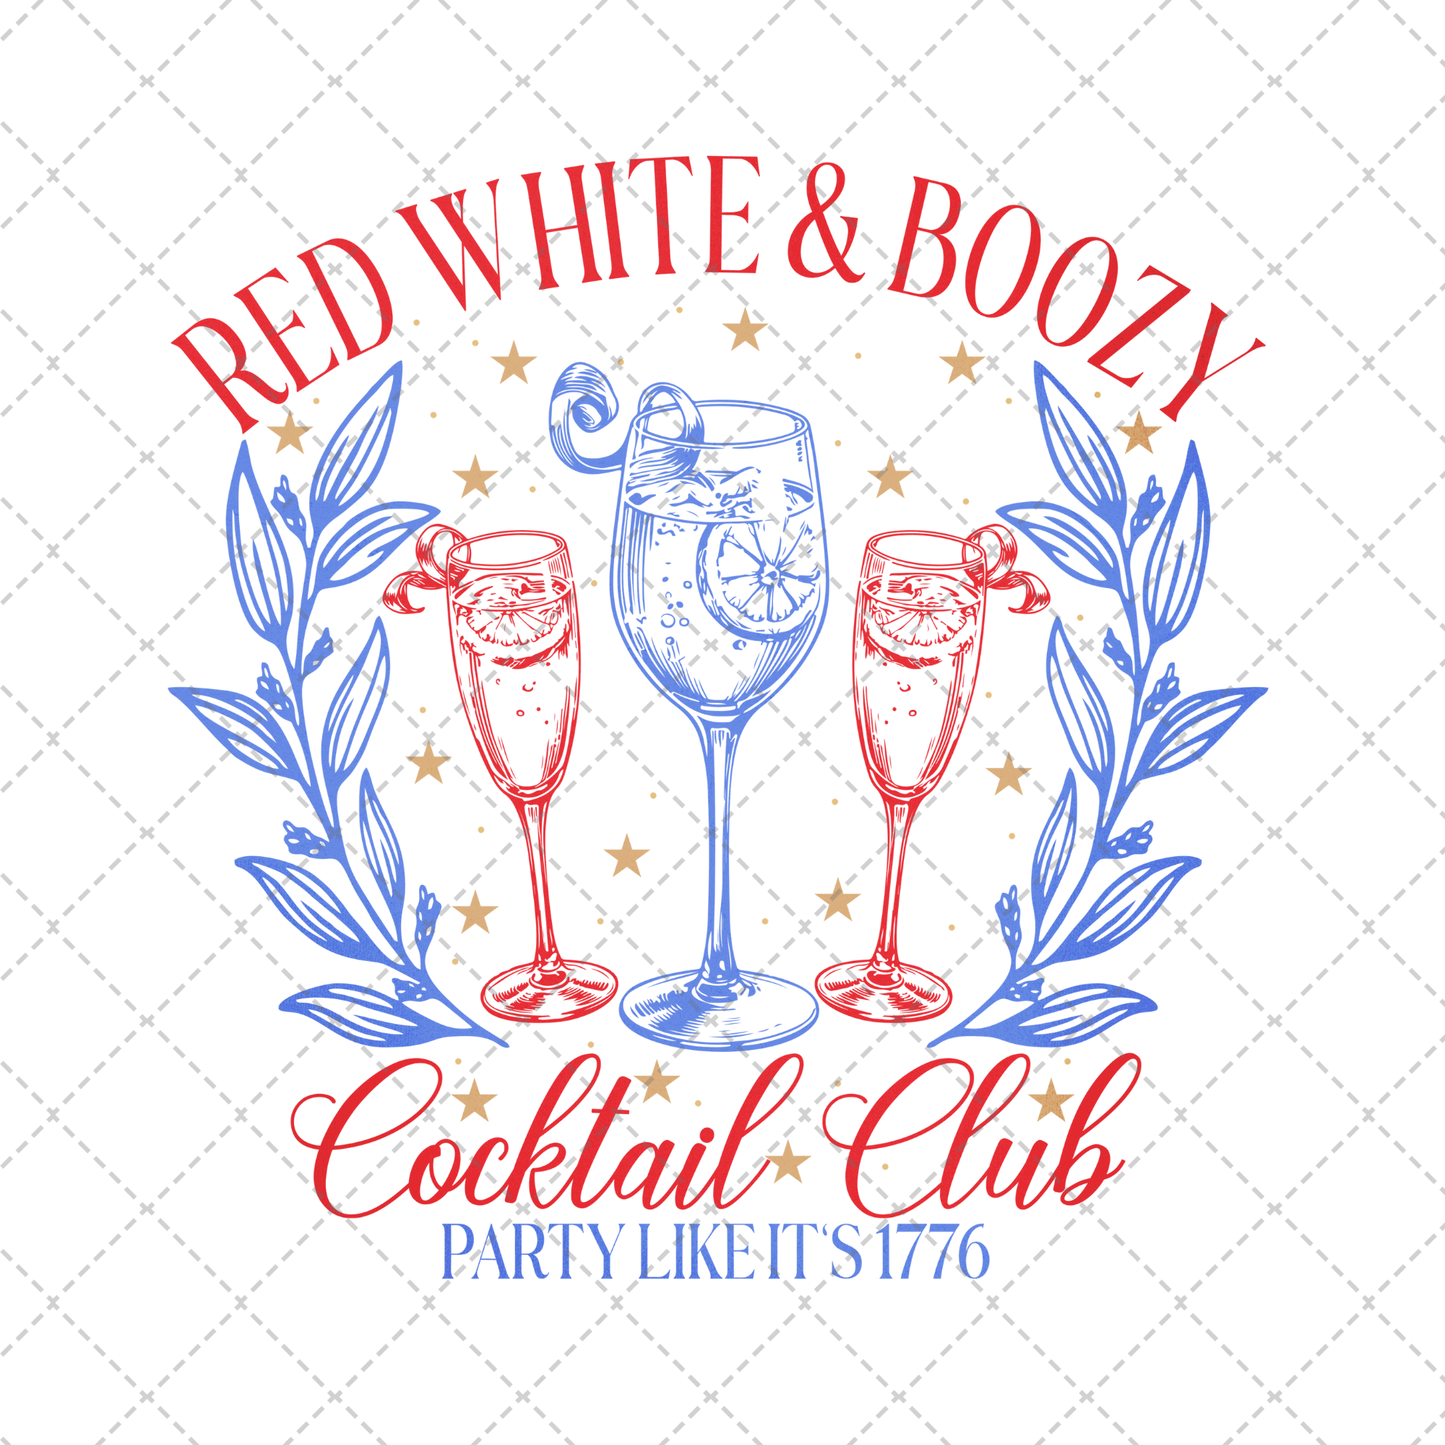 Red White & Boozy Transfer